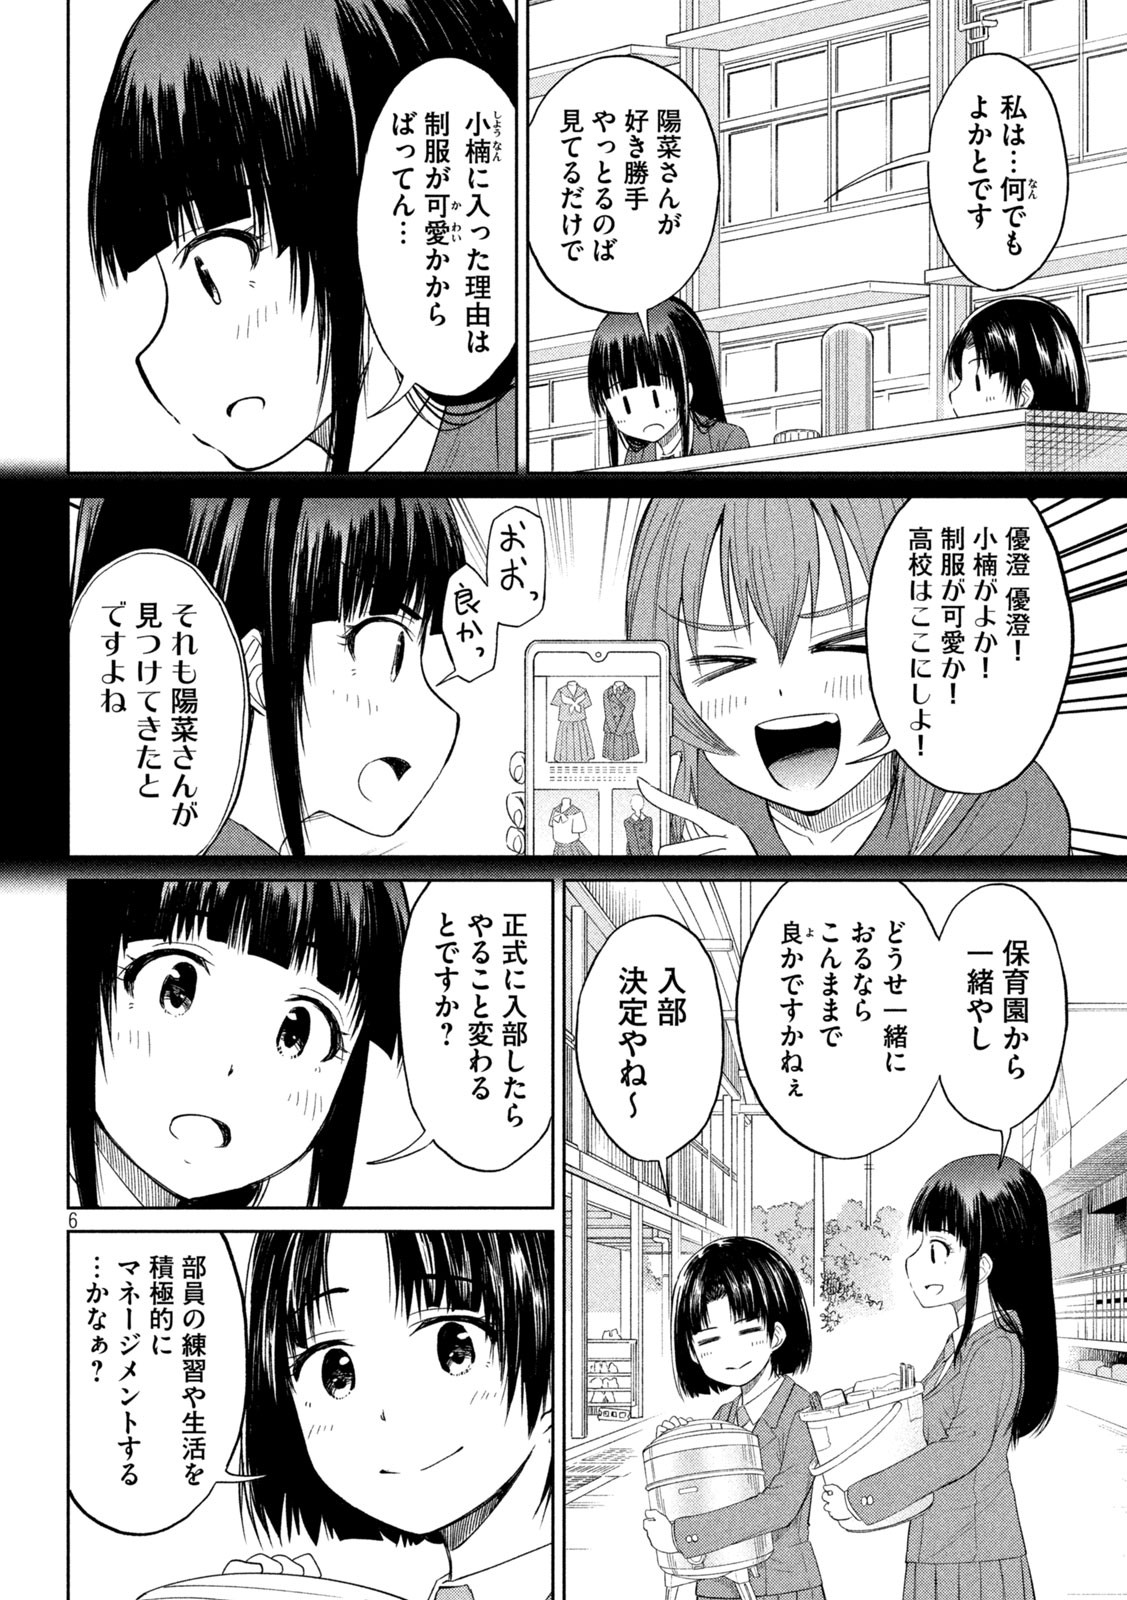 Koharu haru! - Chapter 101 - Page 2